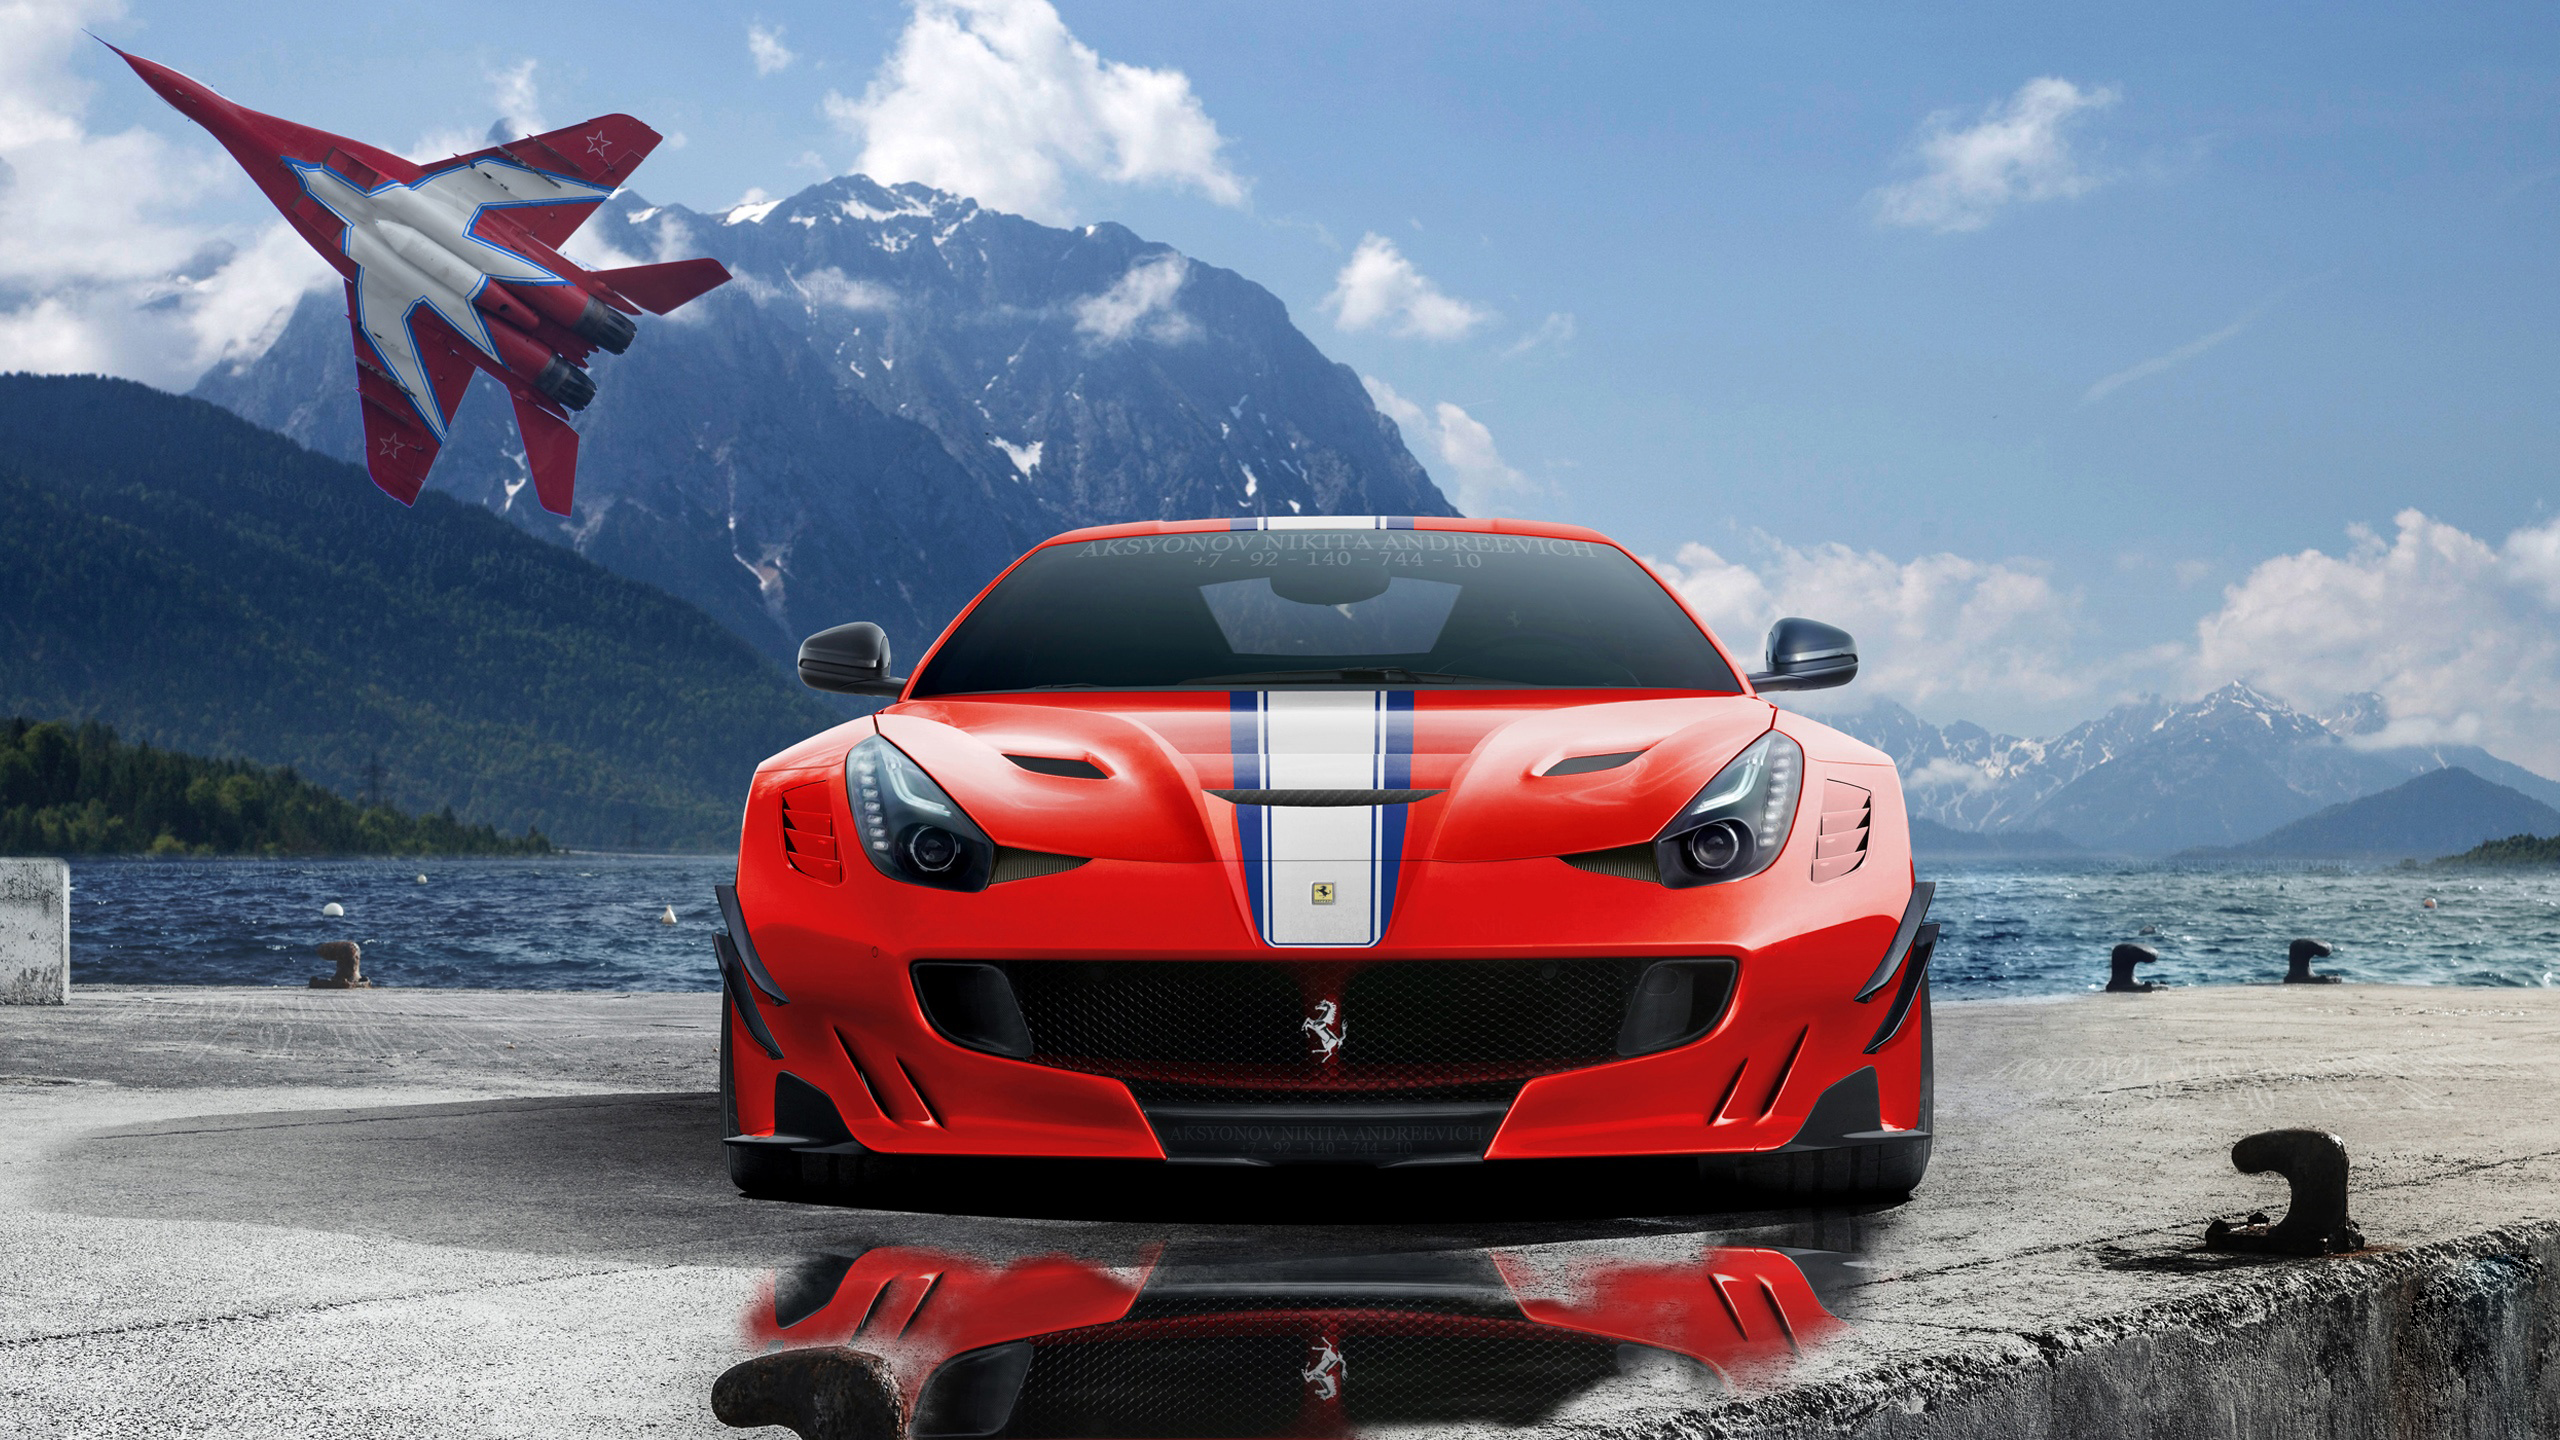 Ferrari F12 Desktop Wallpaper, HD Ferrari F12 Background, Free Image Download